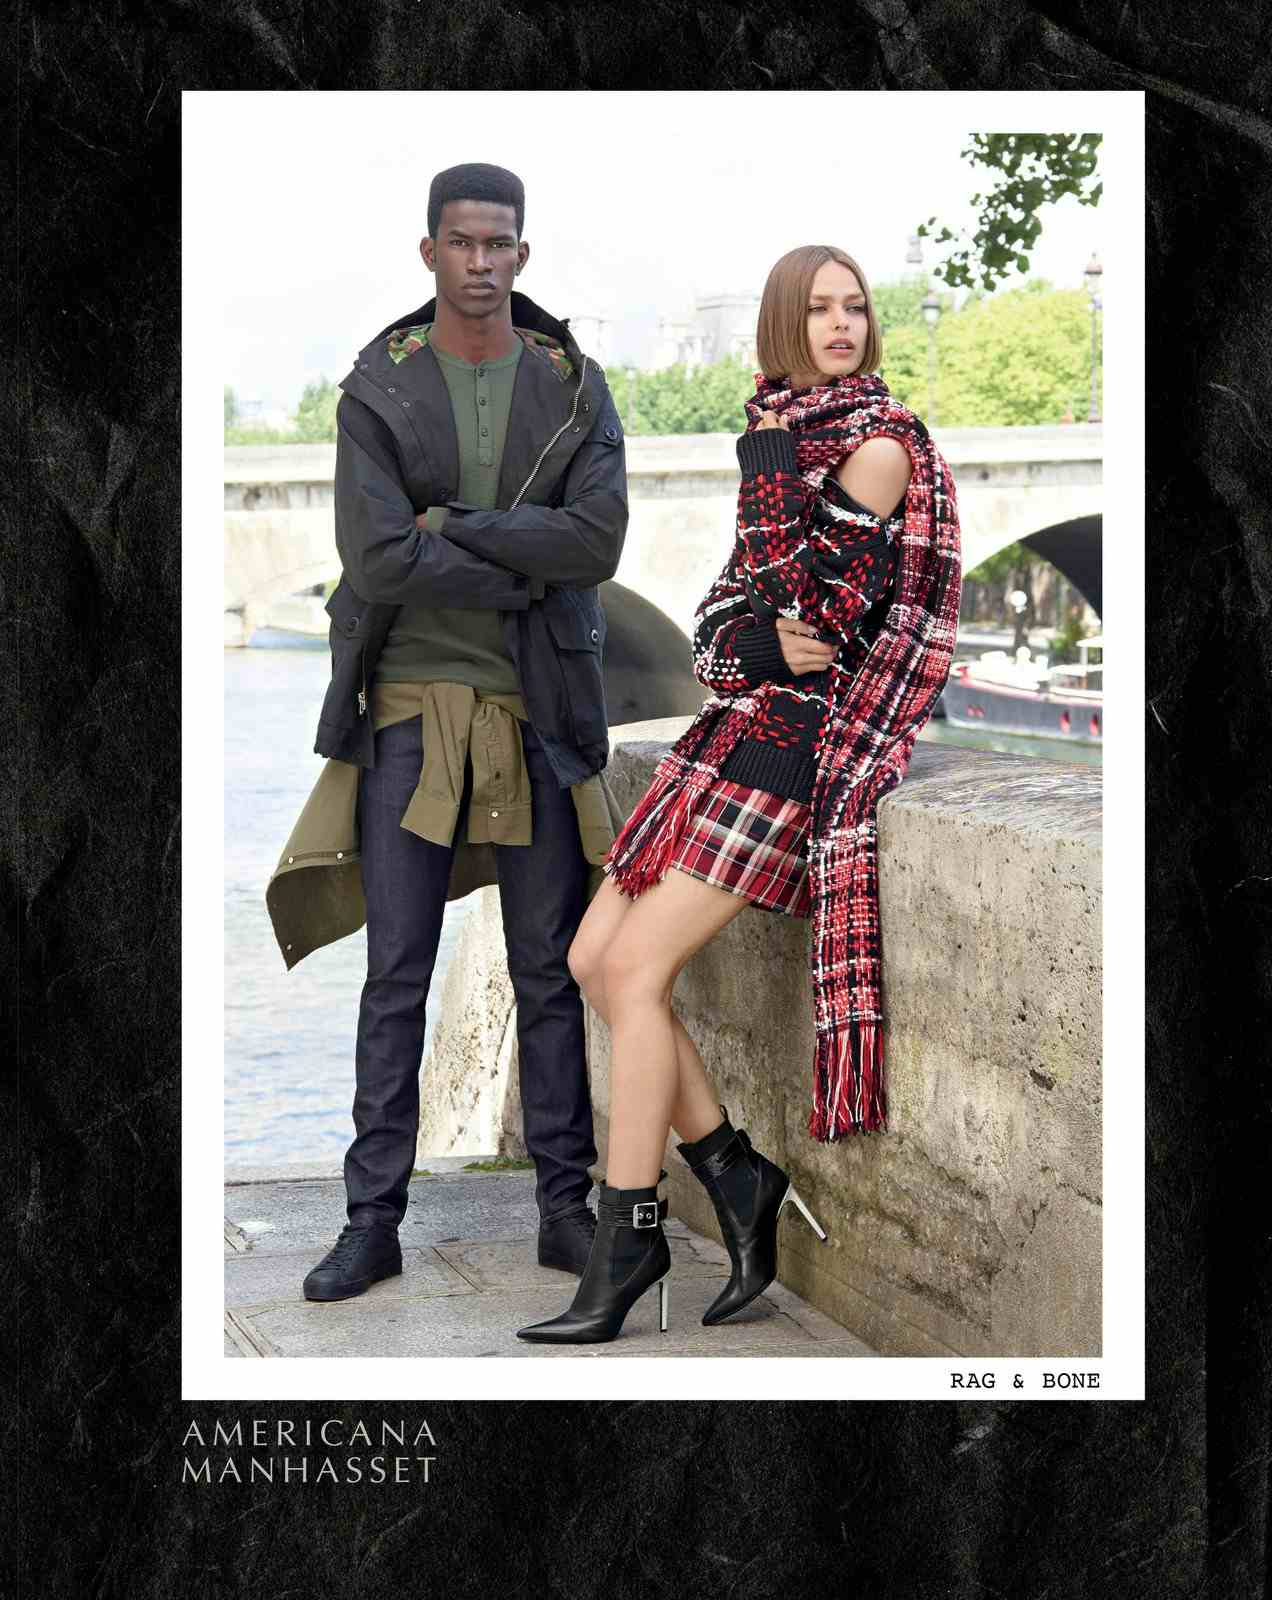 AMERICANA MANHASSET - Fall 2017
Photographer: Laspata & Decaro
Model: Birgit Kos & Salomon Diaz
Stylist: Tara Moser
Location: Paris, France